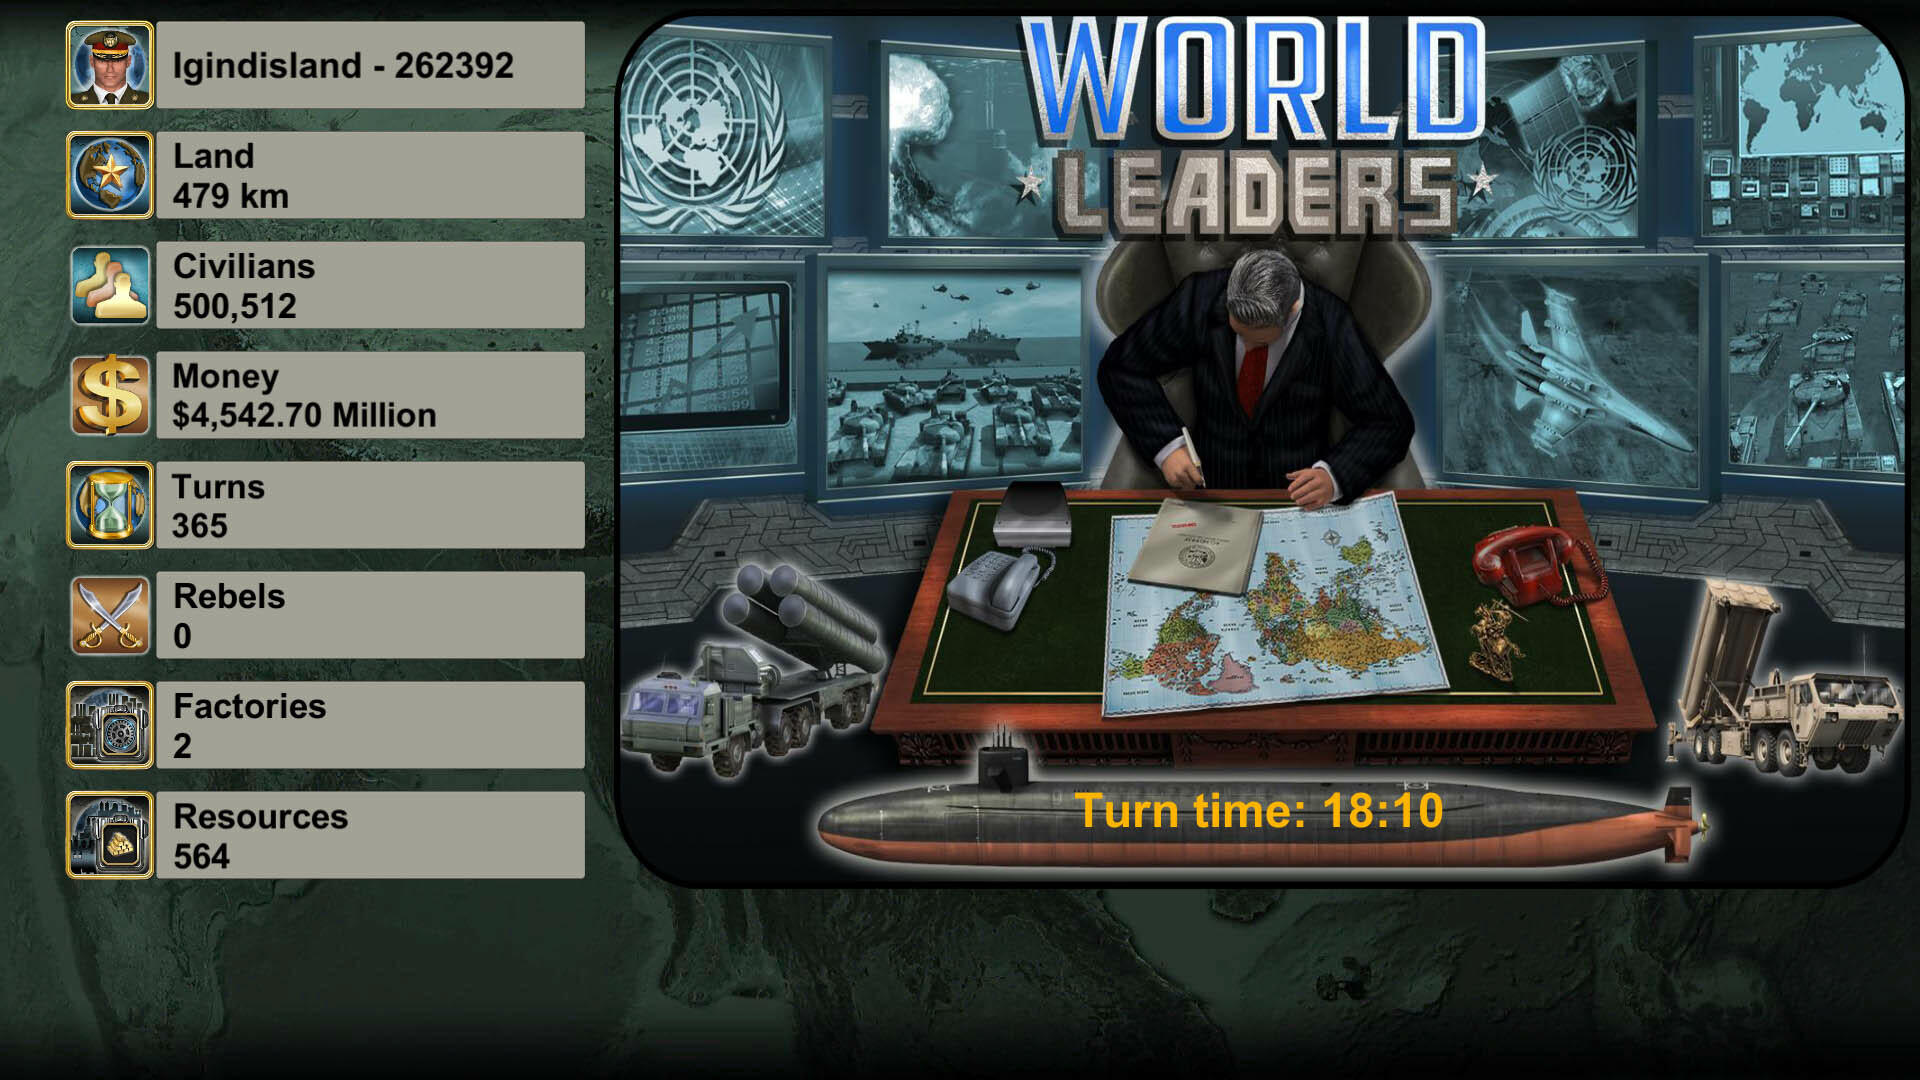 Screenshot 1 of Leader mondiali 